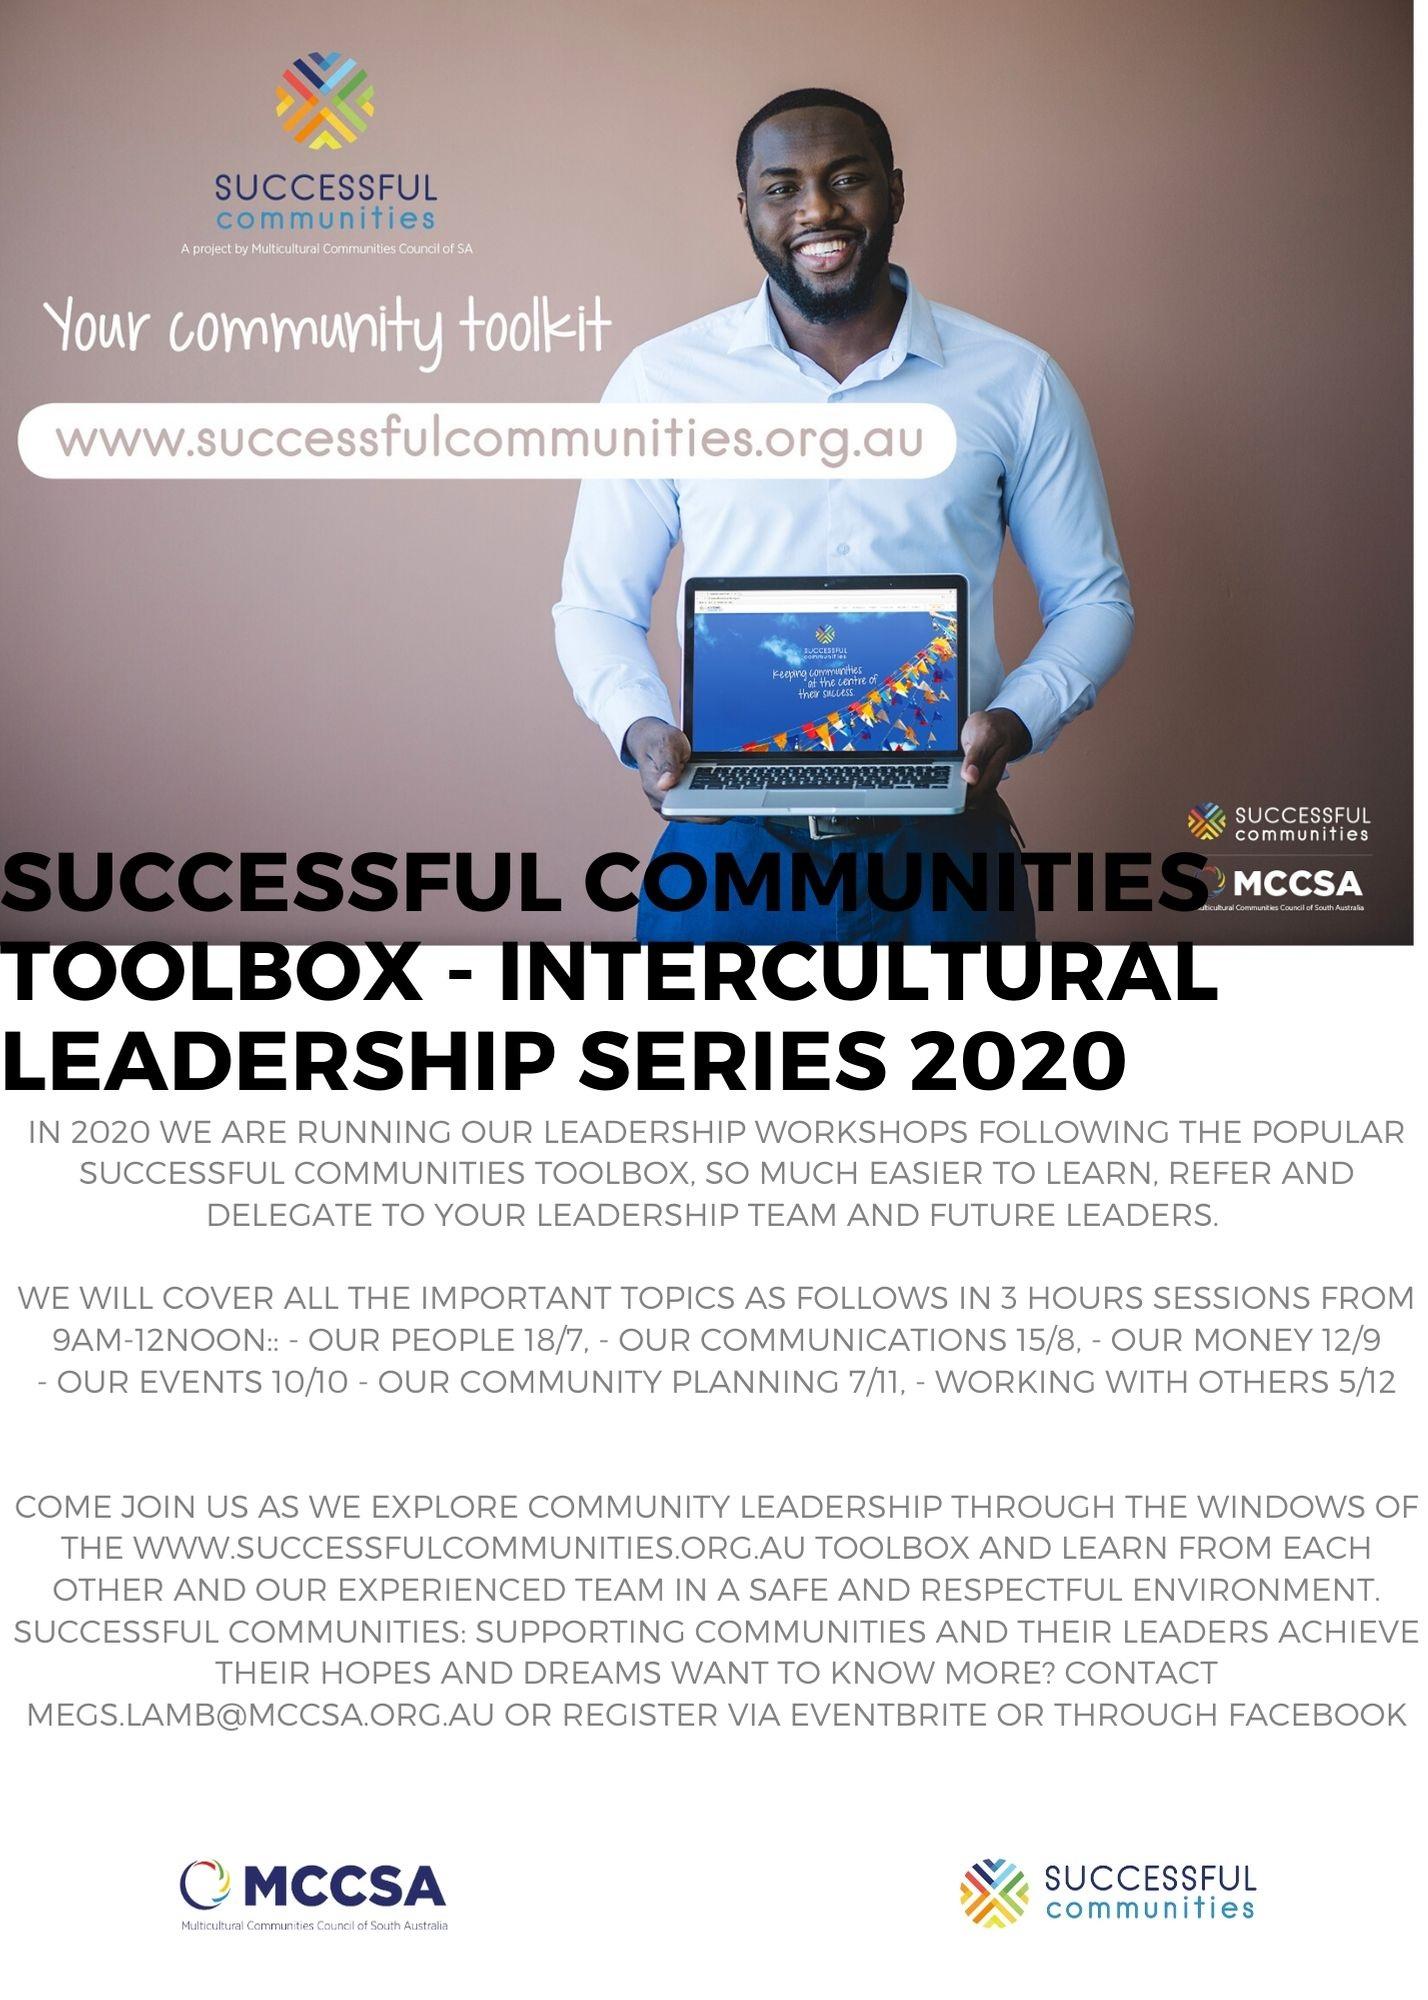 Successful Communities - Intercultural Leadership: Toolbox Series - Leading Our People 18/7